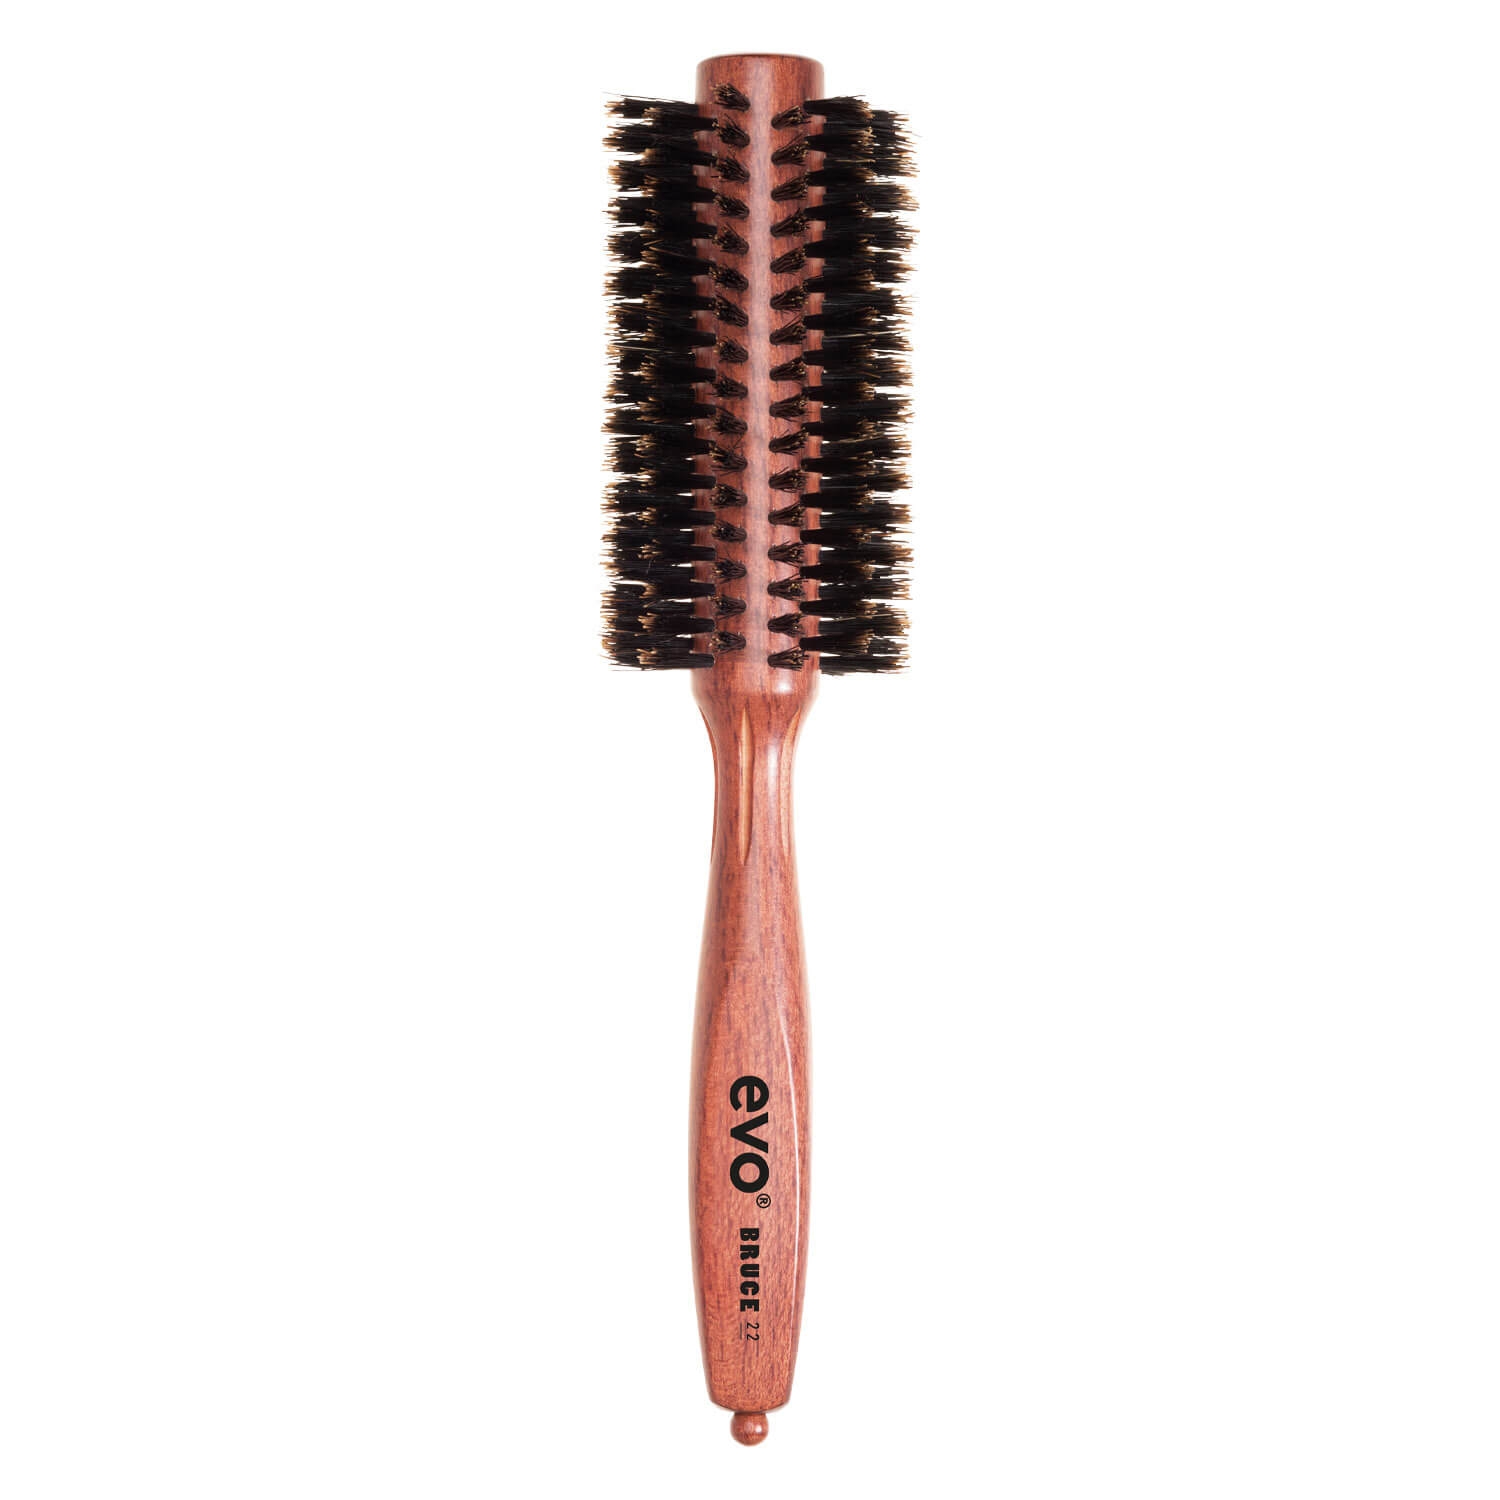 Produktbild von evo brushes - bruce bristle radial brush